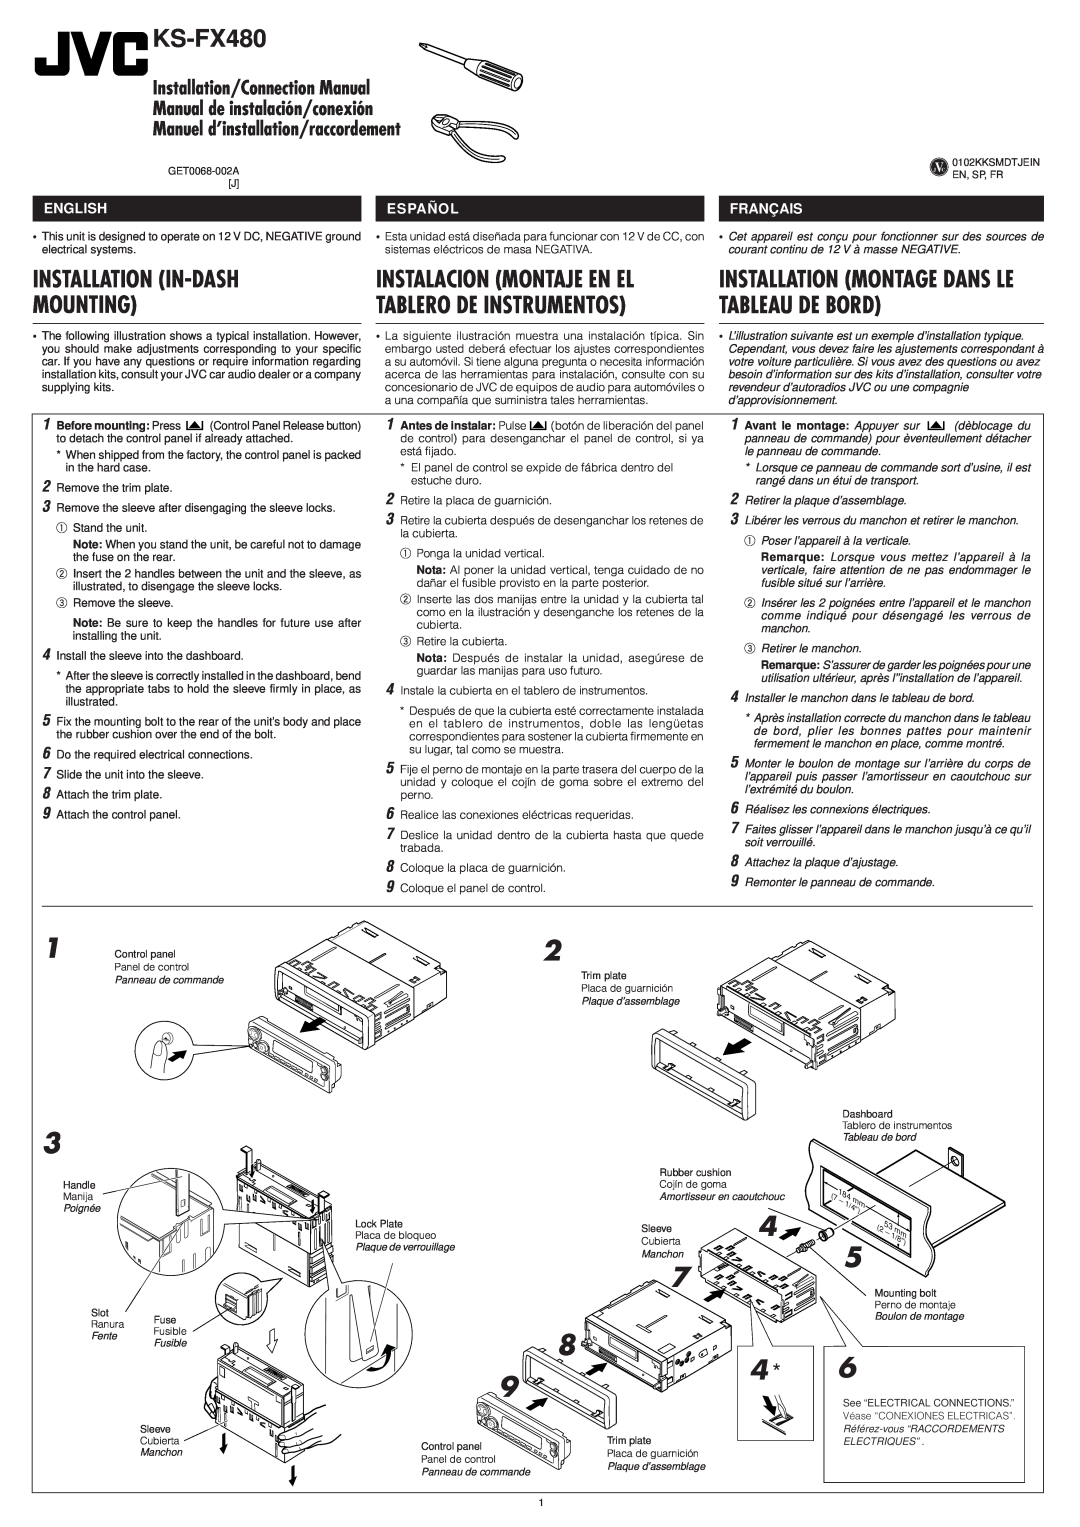 JVC KS-FX480J manual Installation In-Dash Mounting, Tableau De Bord, Installation Montage Dans Le, English, Français 